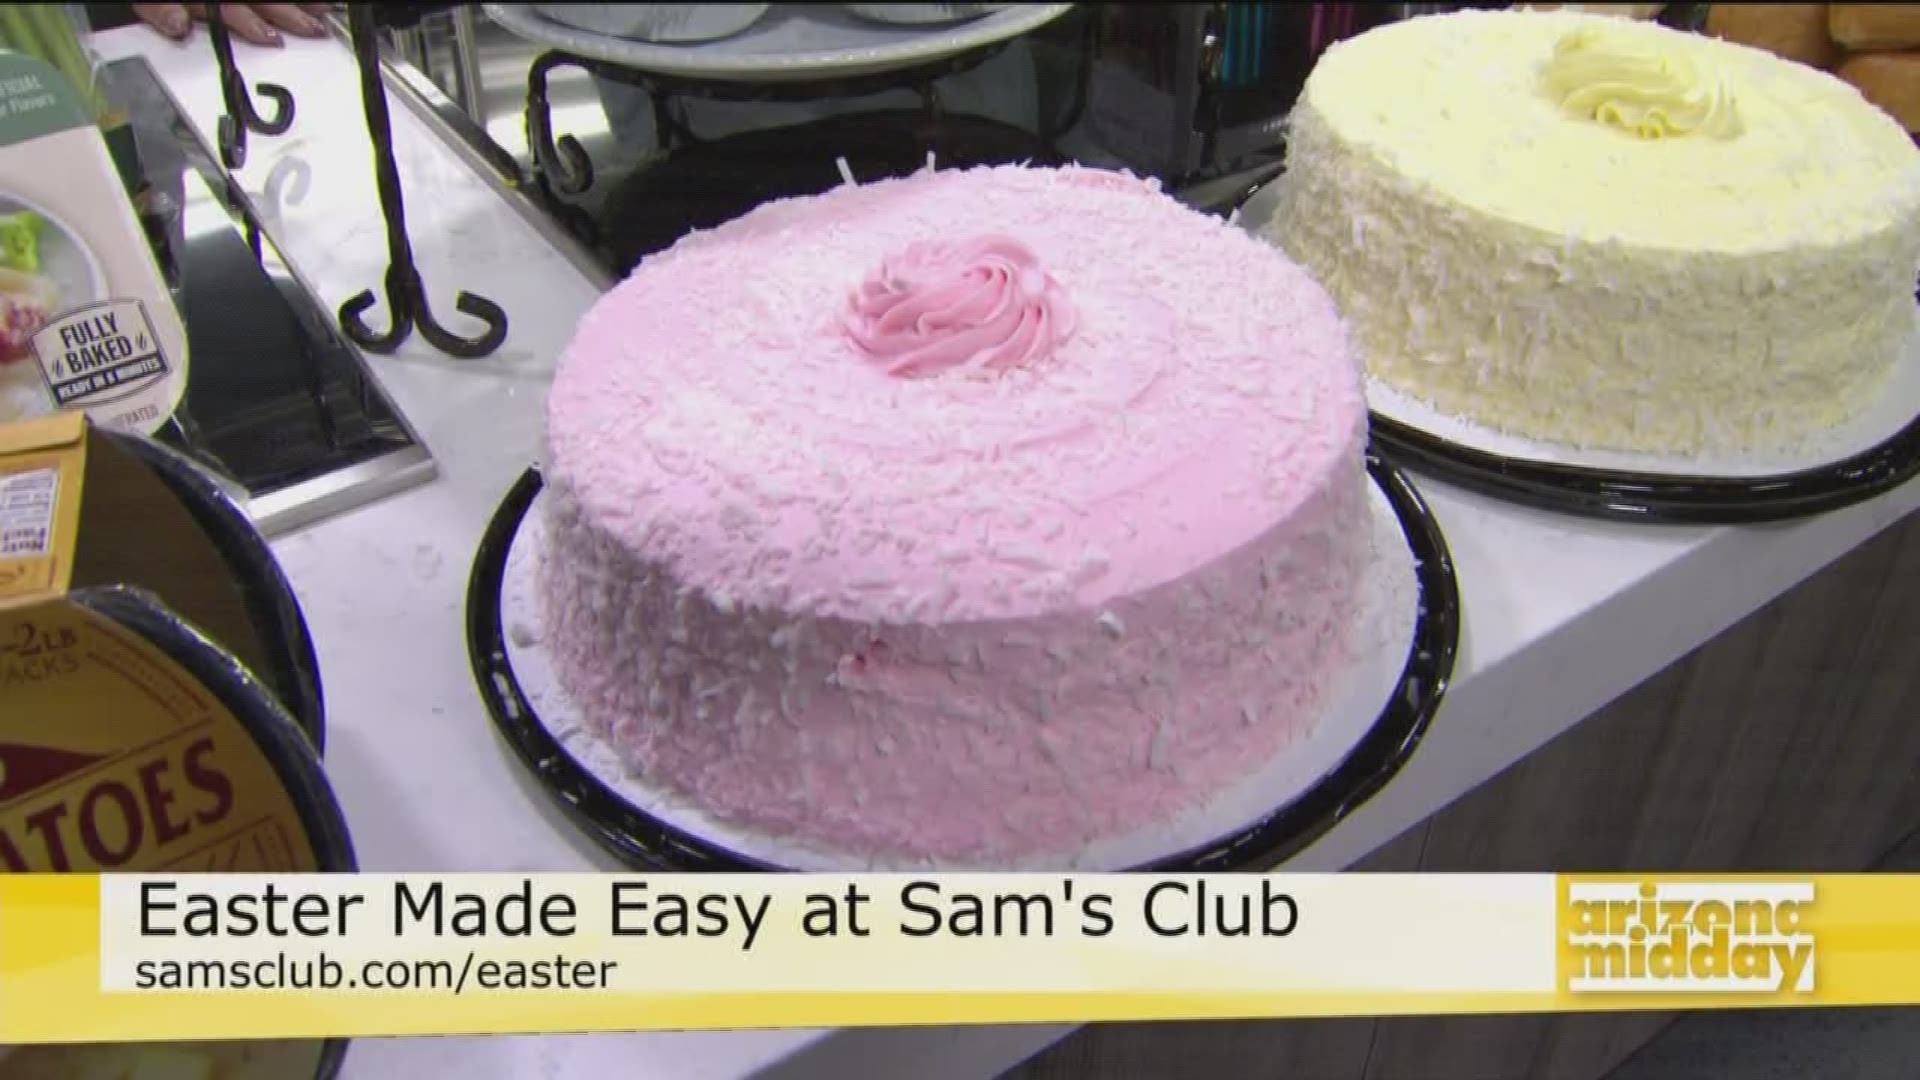 The Best Bakery Treats At Sam's Club, Ranked